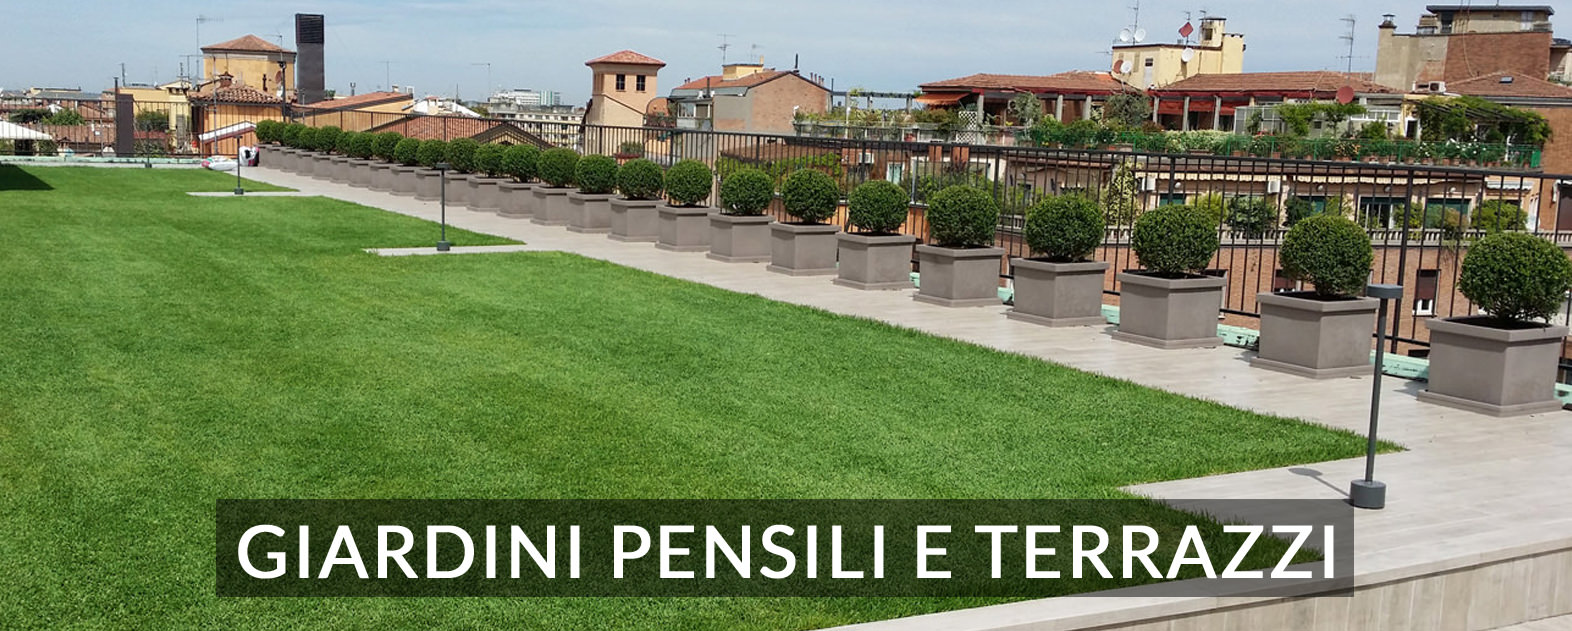 pensili_terrazzi_mini